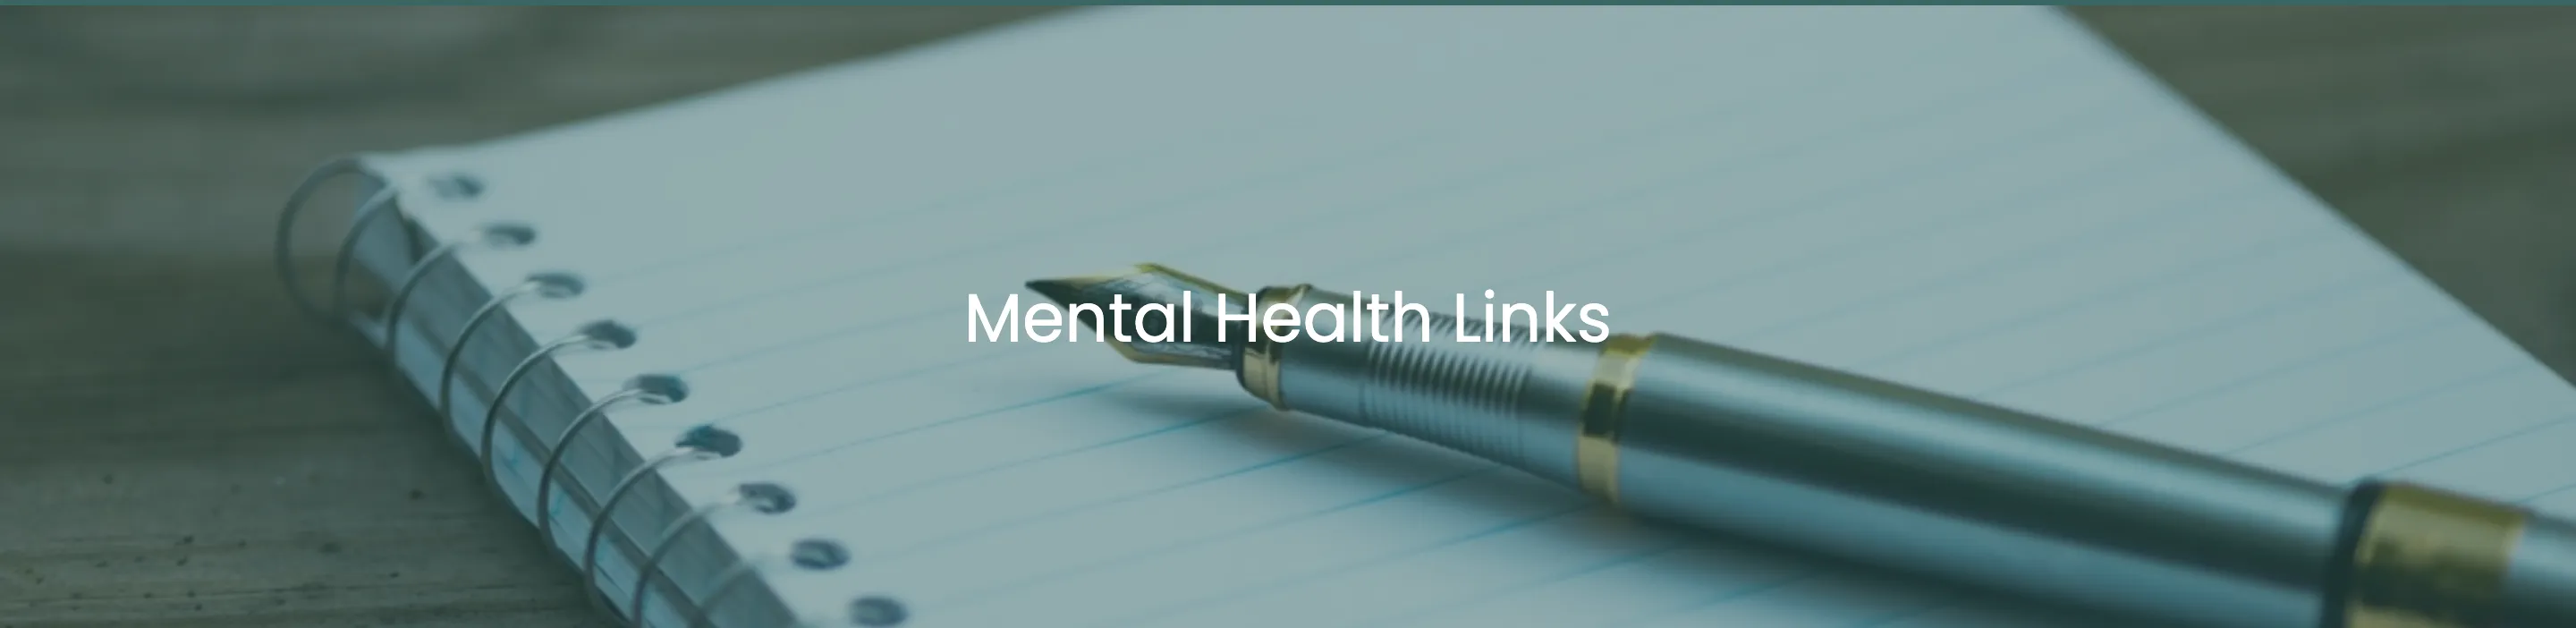 mental health links 